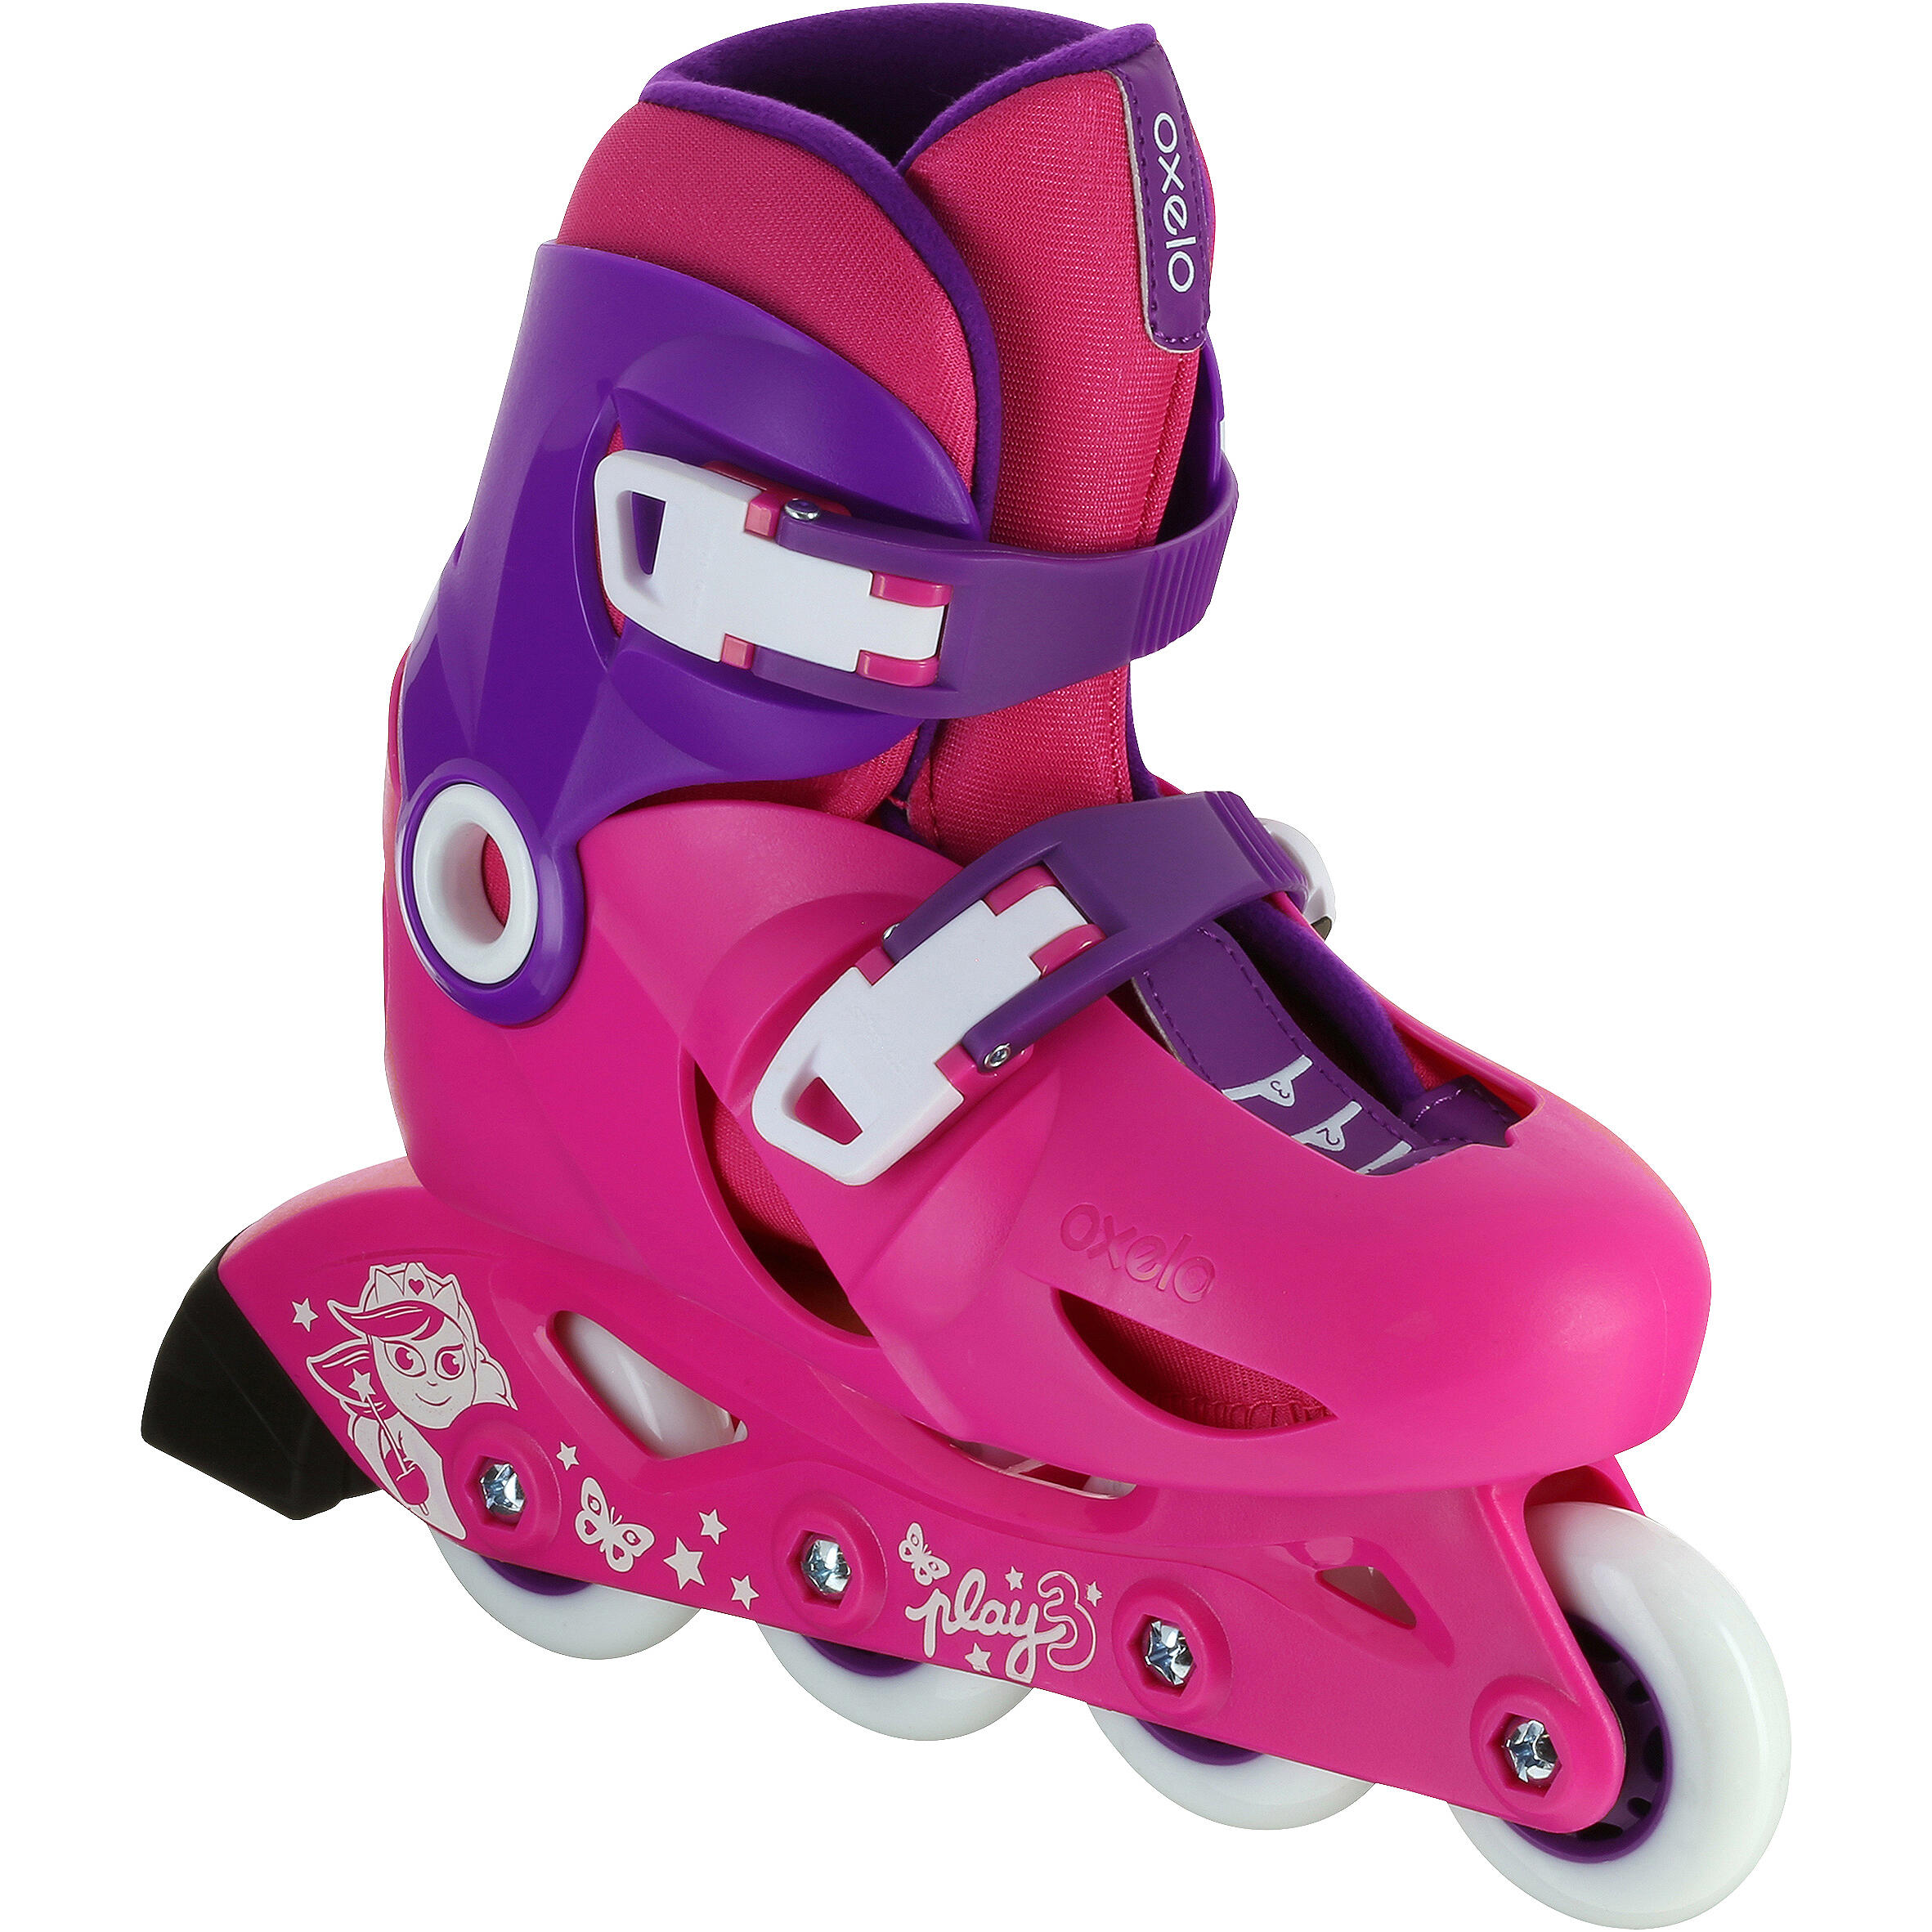 Skates- Inline/Roller Skates for Kids 